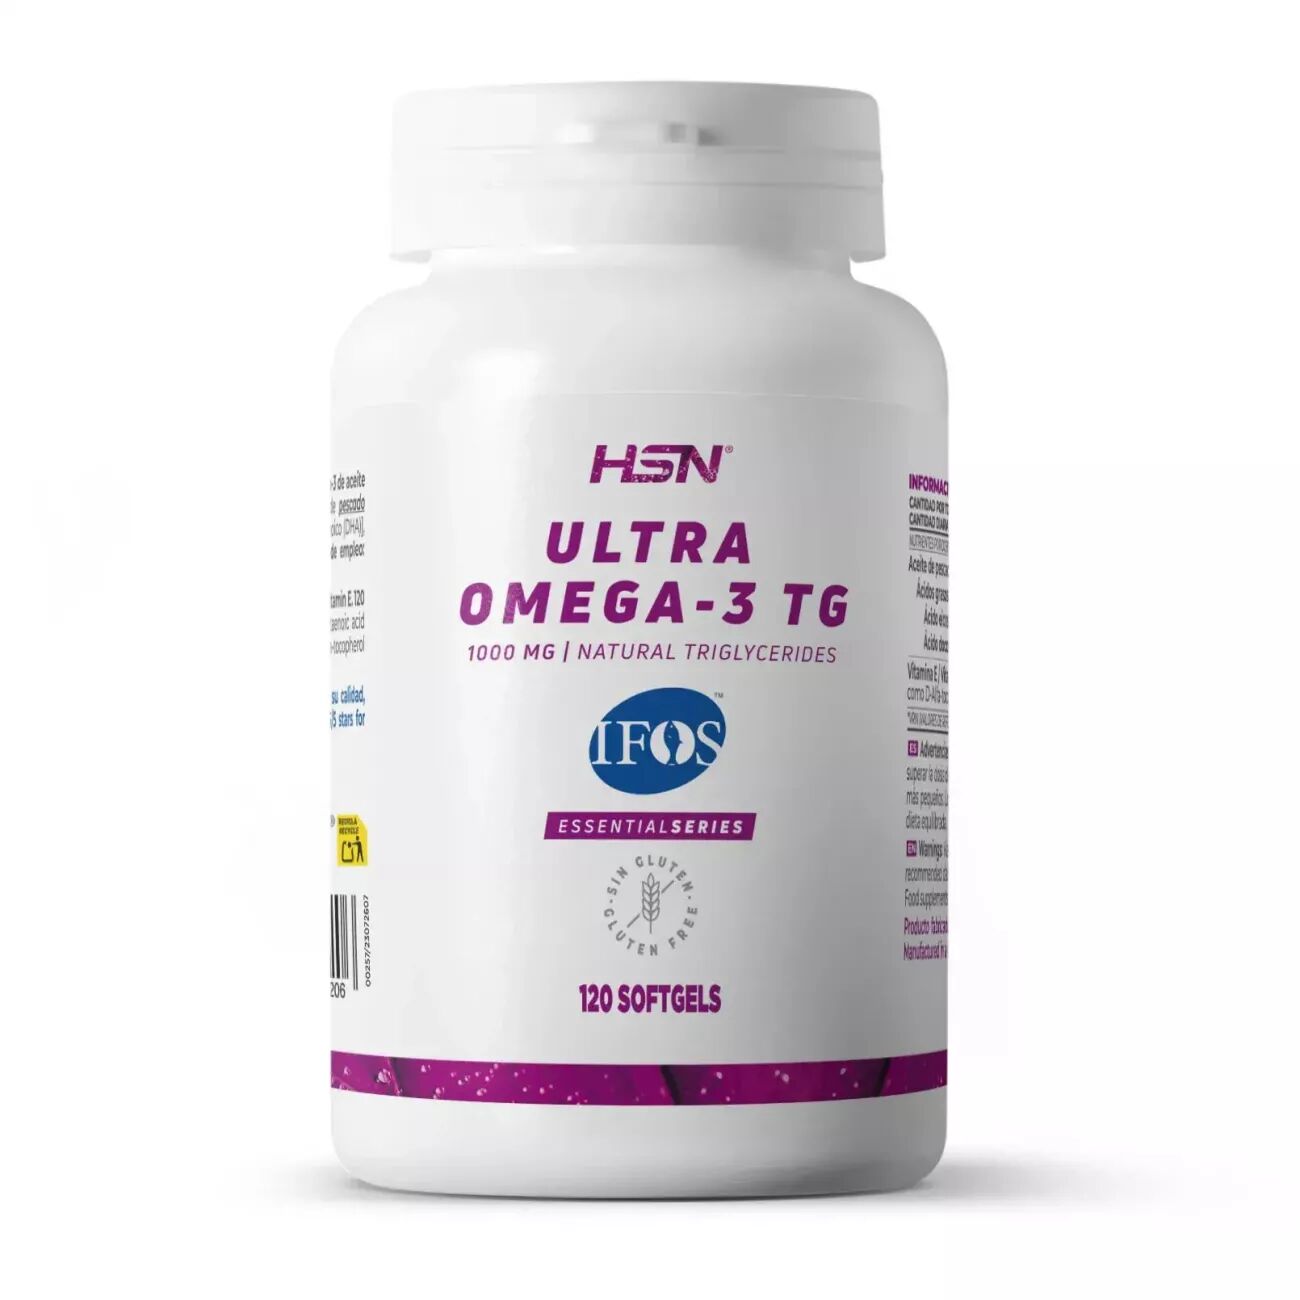 HSN Ultra omega-3 tg (ifos) 1000mg - 120 perlas